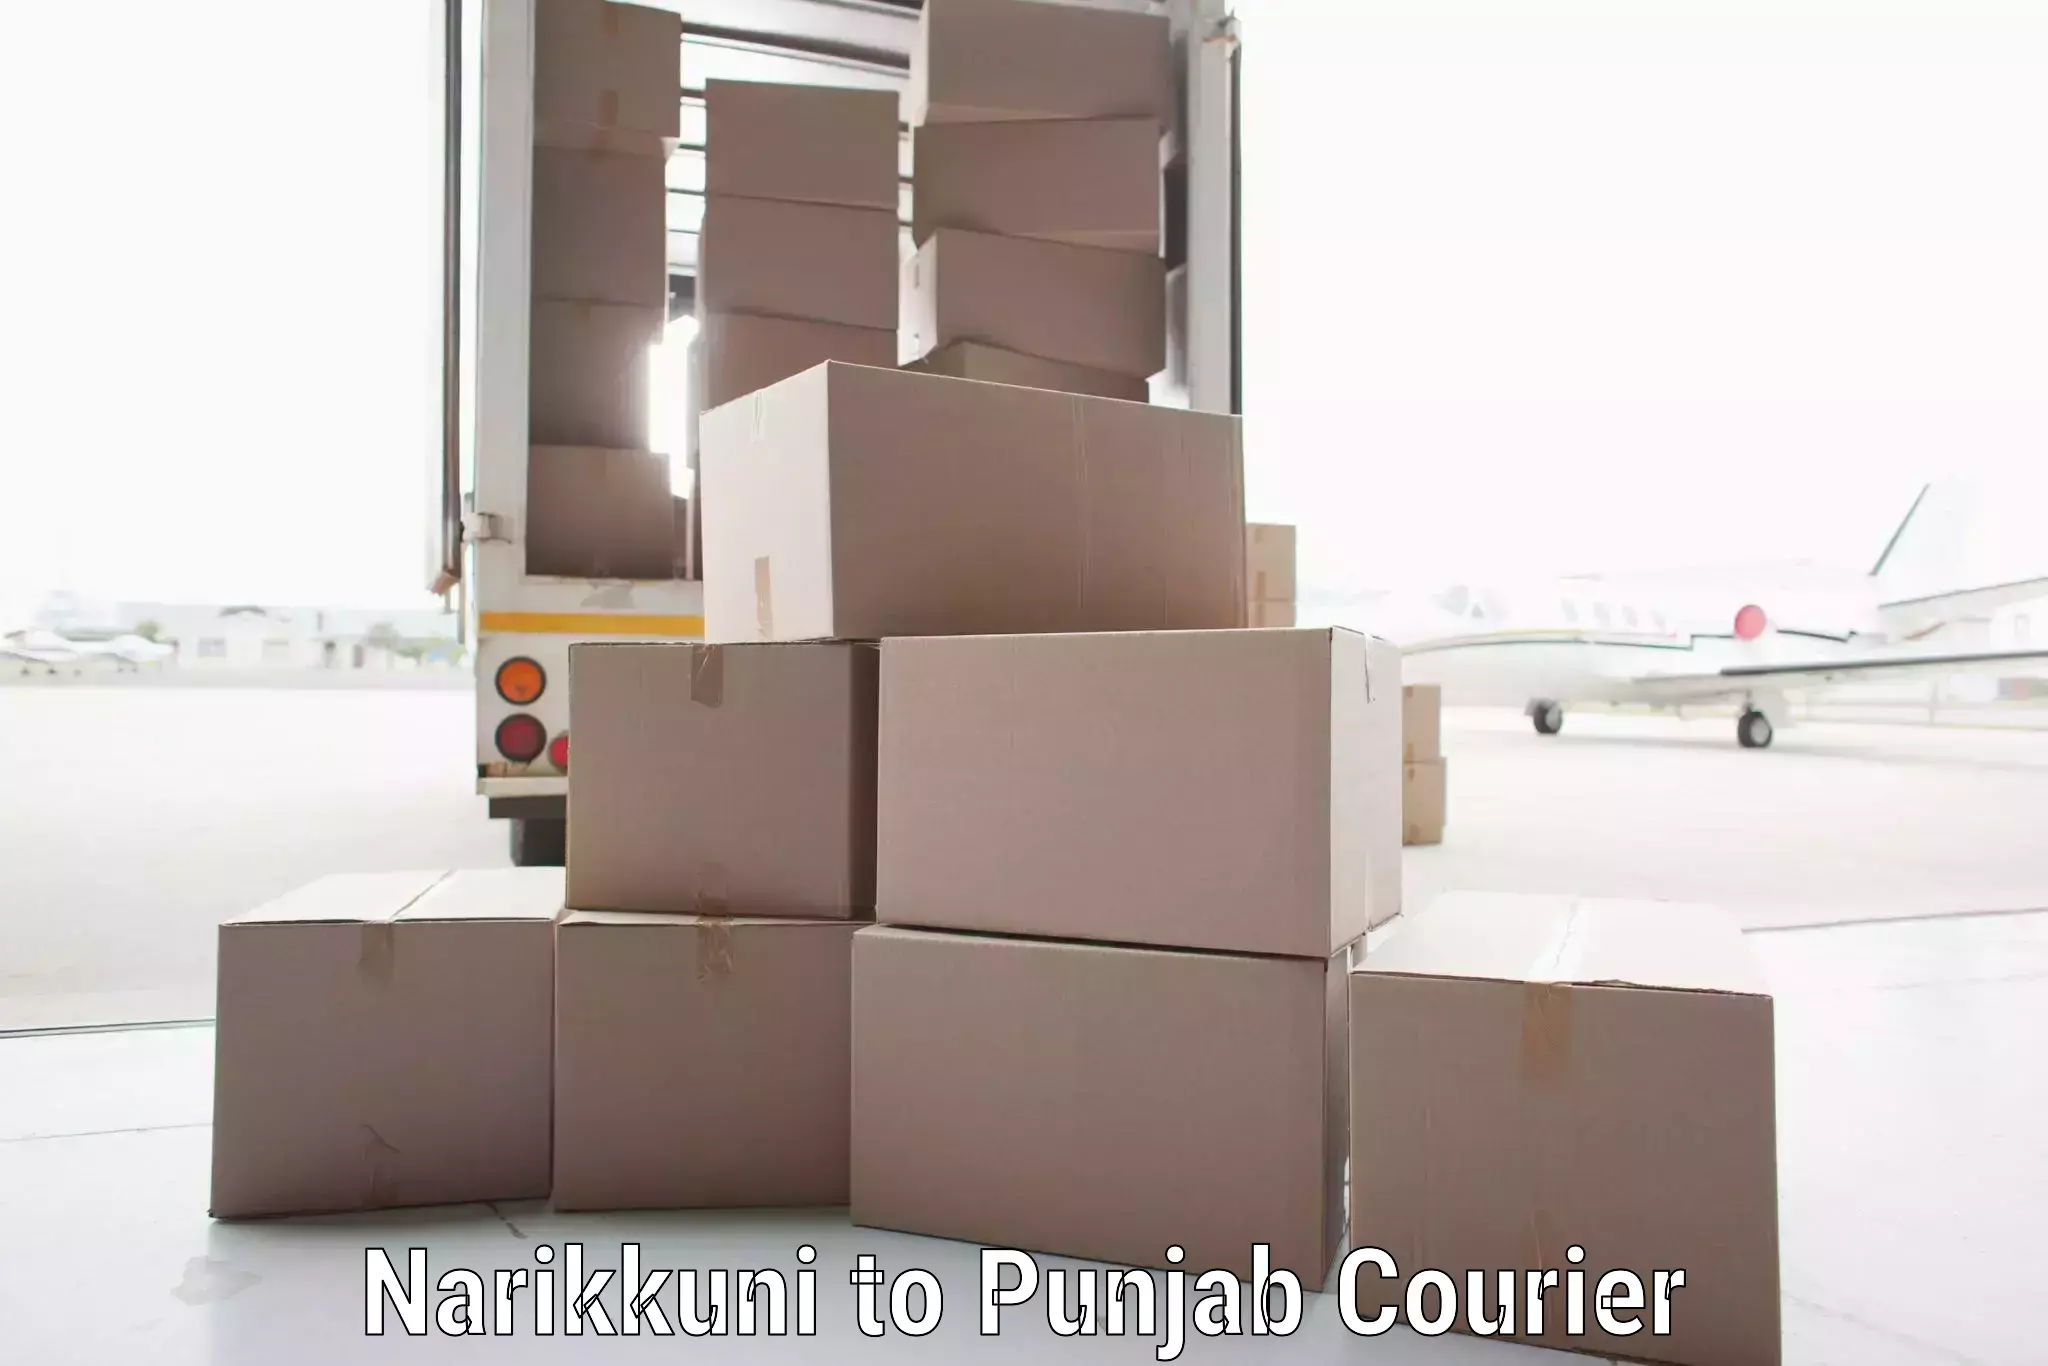 Efficient order fulfillment Narikkuni to Sultanpur Lodhi